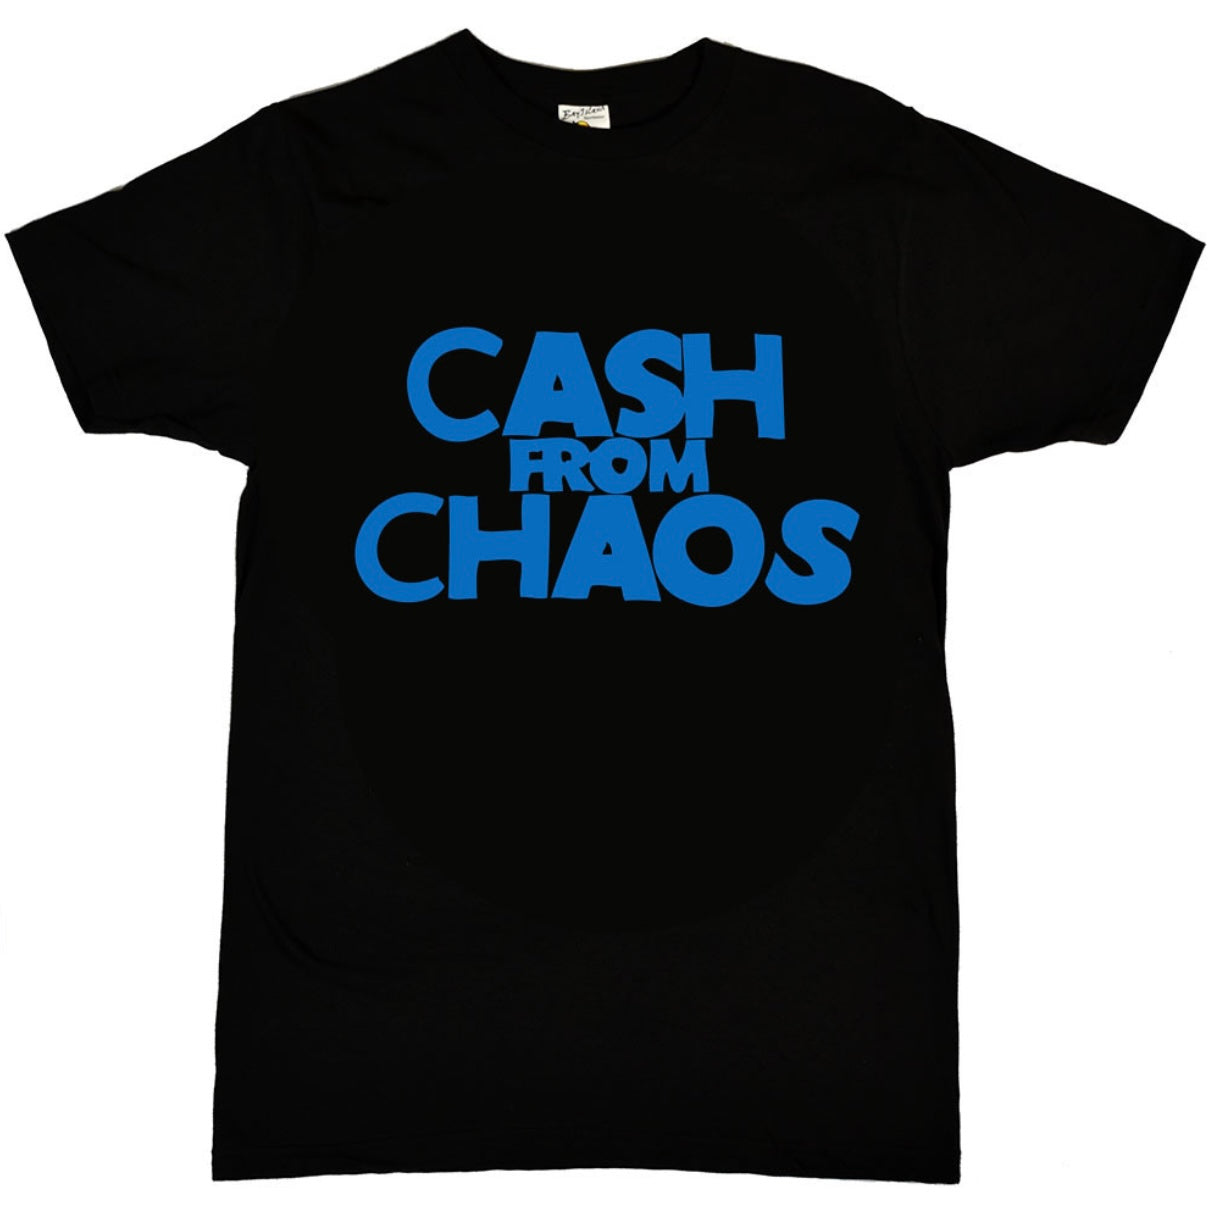 Malcom Mclaren “Cash From Chaos” Seditionaries T-Shirt